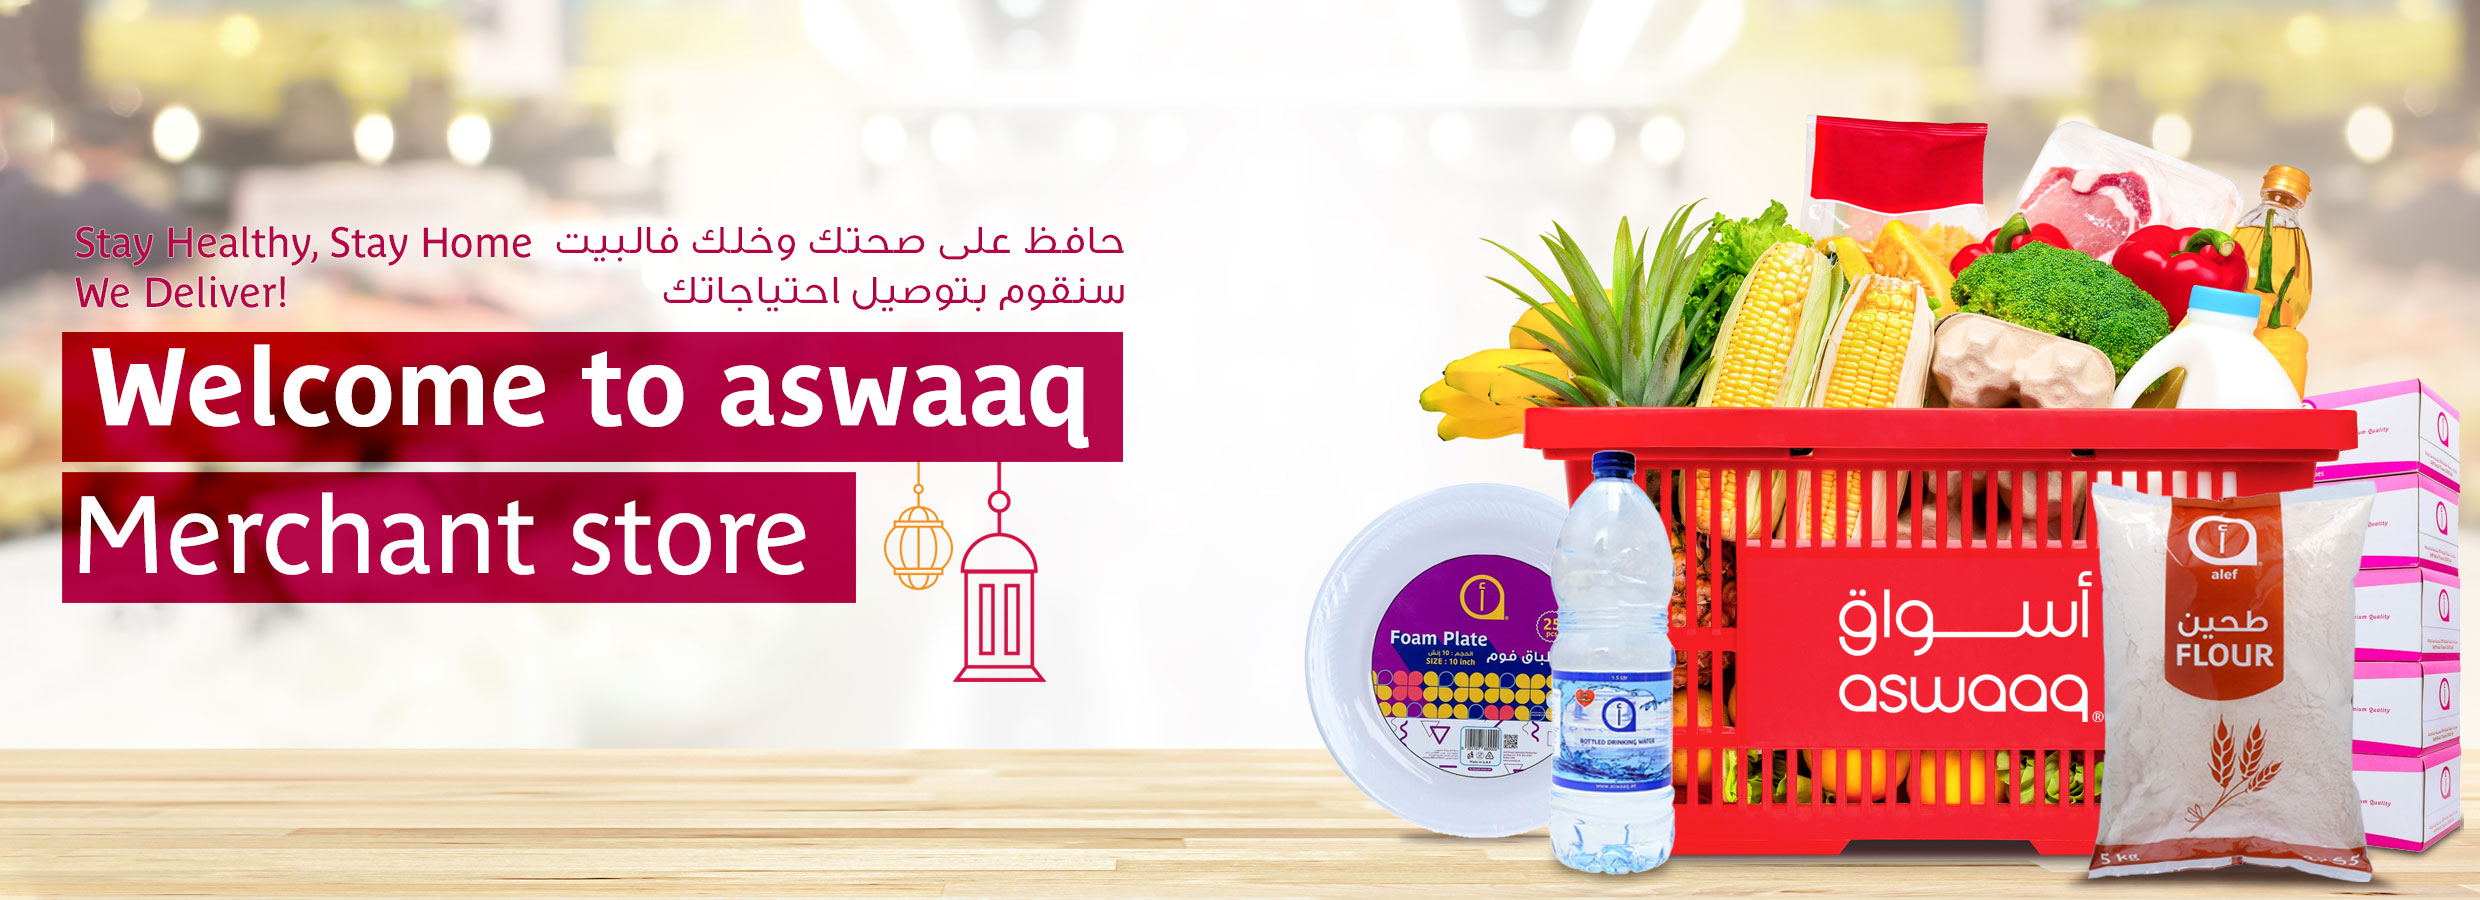 aswaaq| DubaiStore.com